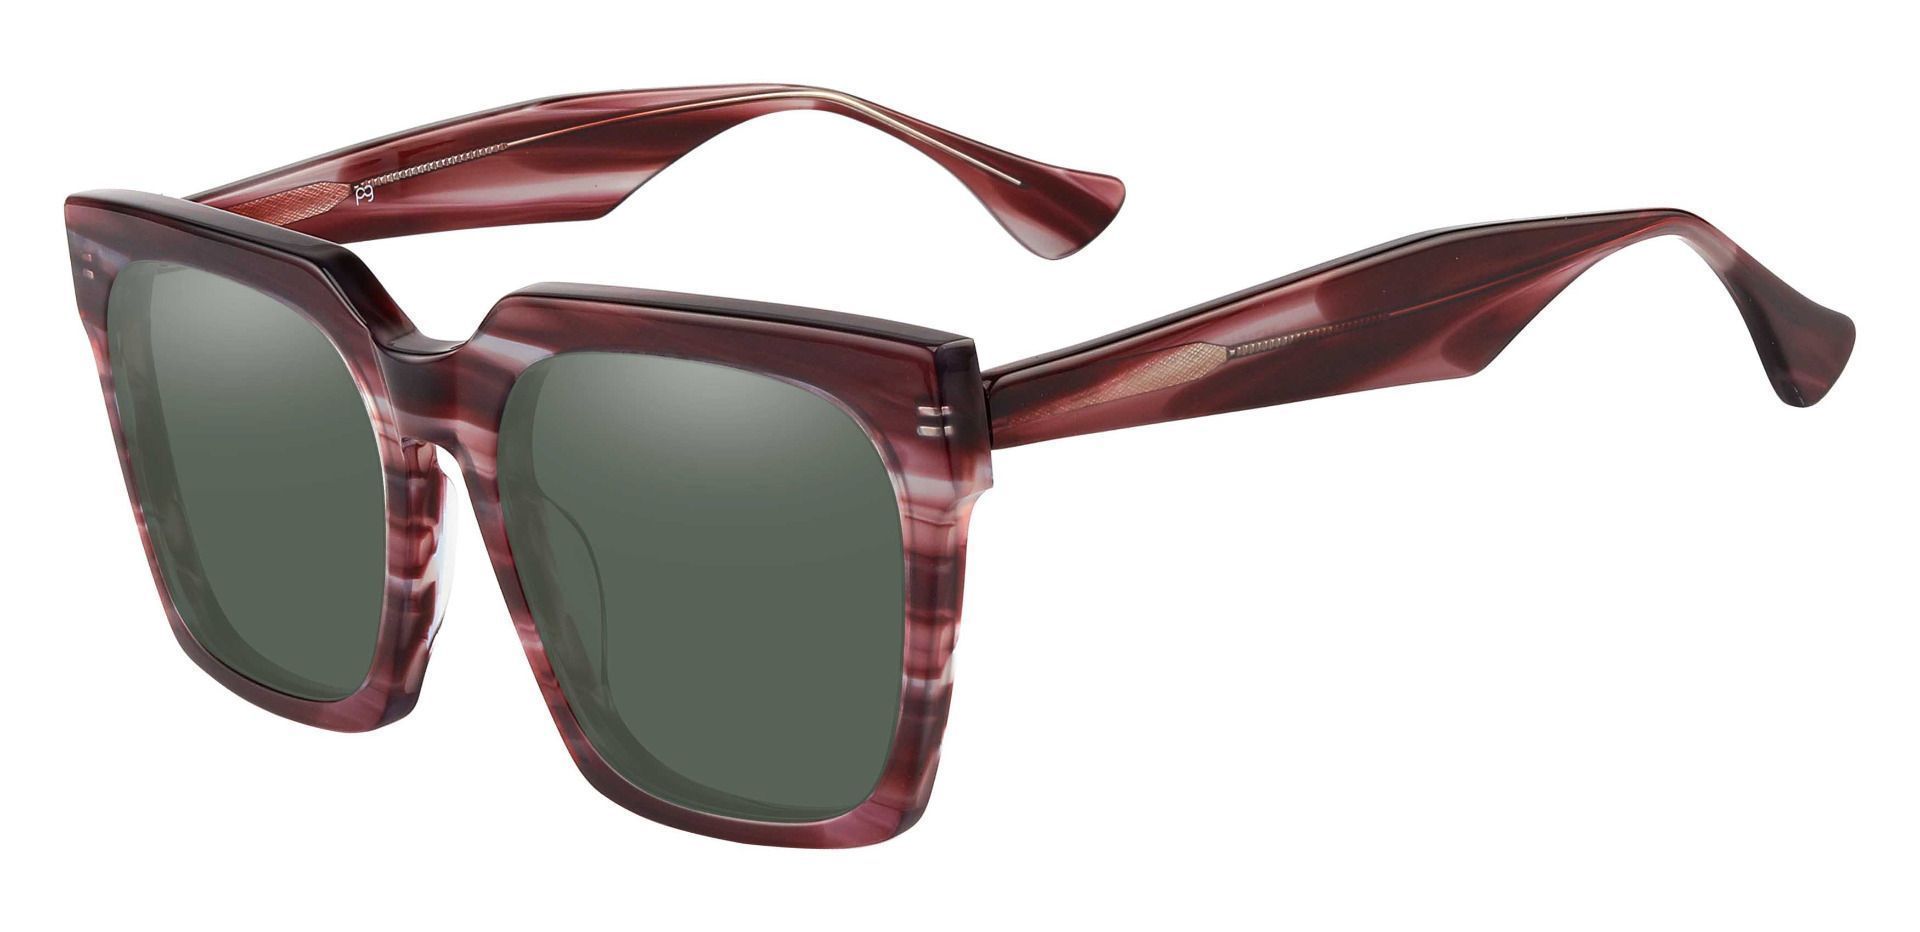 Harlan Square Prescription Sunglasses - Striped Frame With Green Lenses